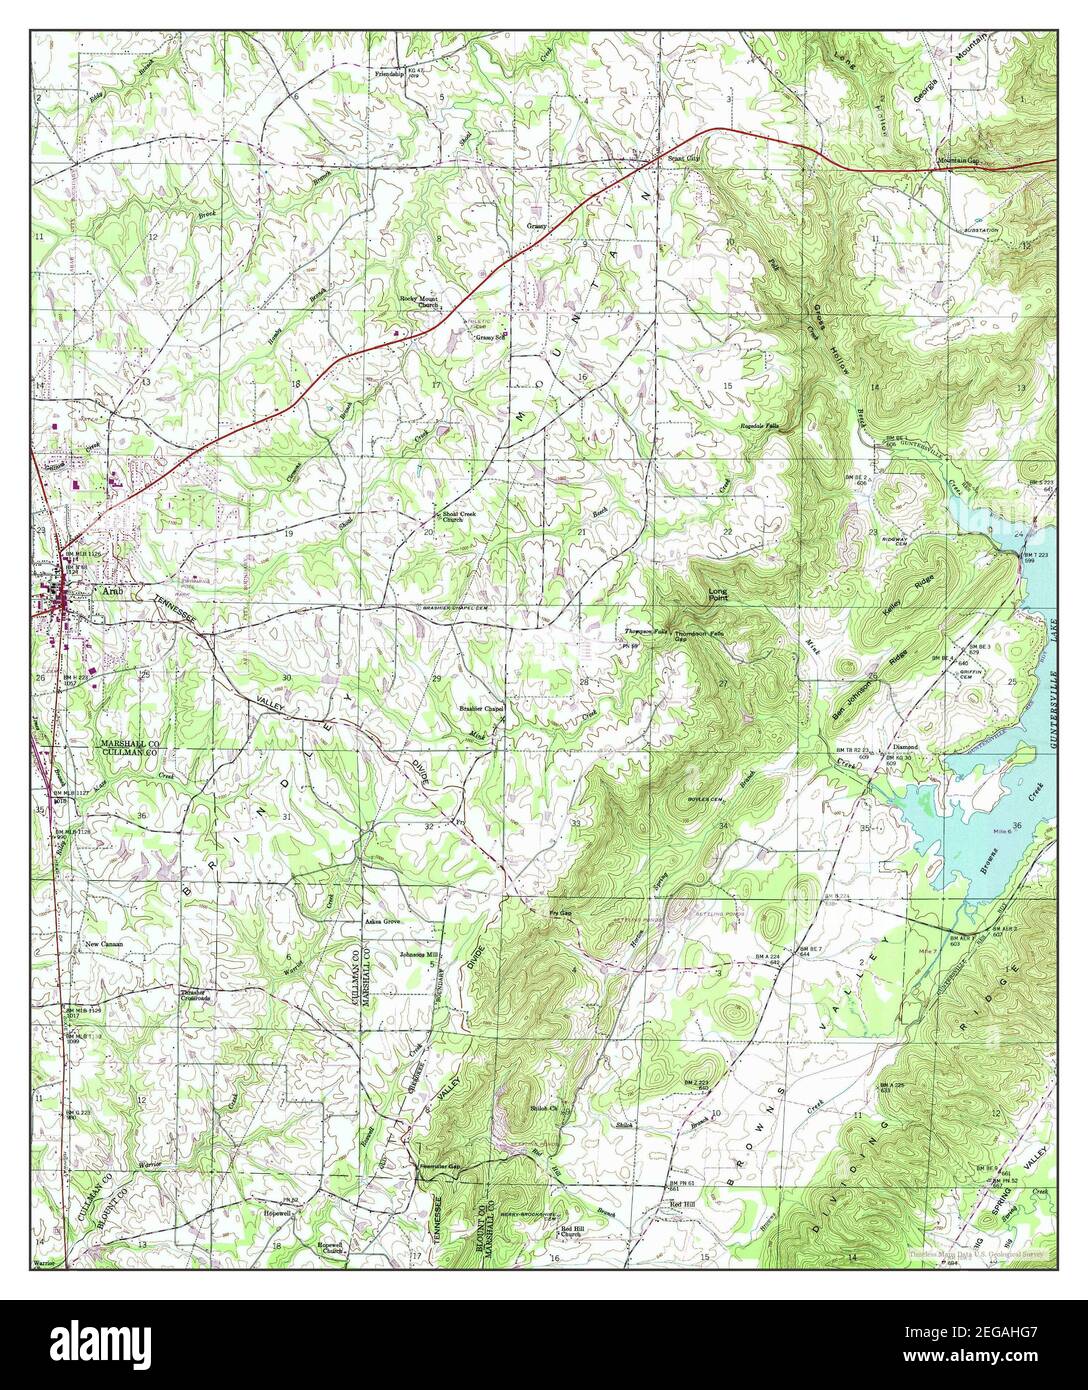 Arab, Alabama, map 1948, 1:24000, United States of America by Timeless Maps, data U.S. Geological Survey Stock Photo